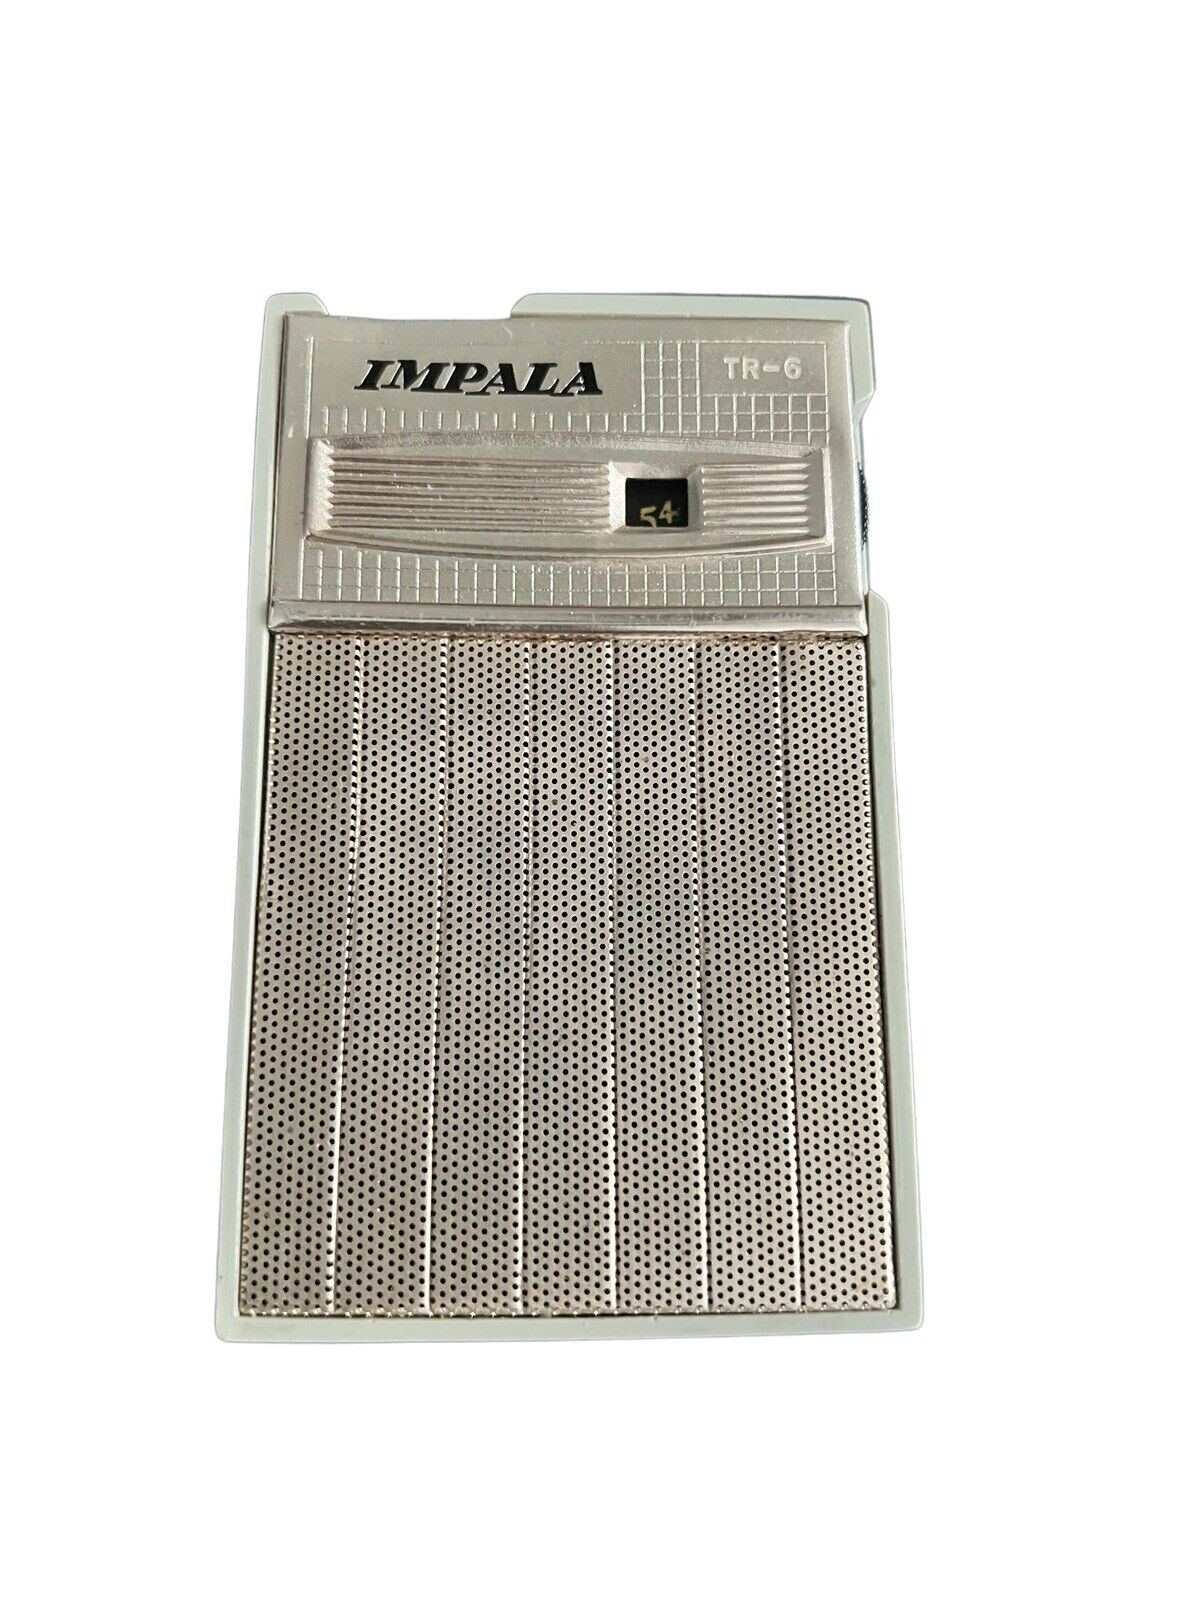 Vintage 1960s Impala Transistor Radio Works with case